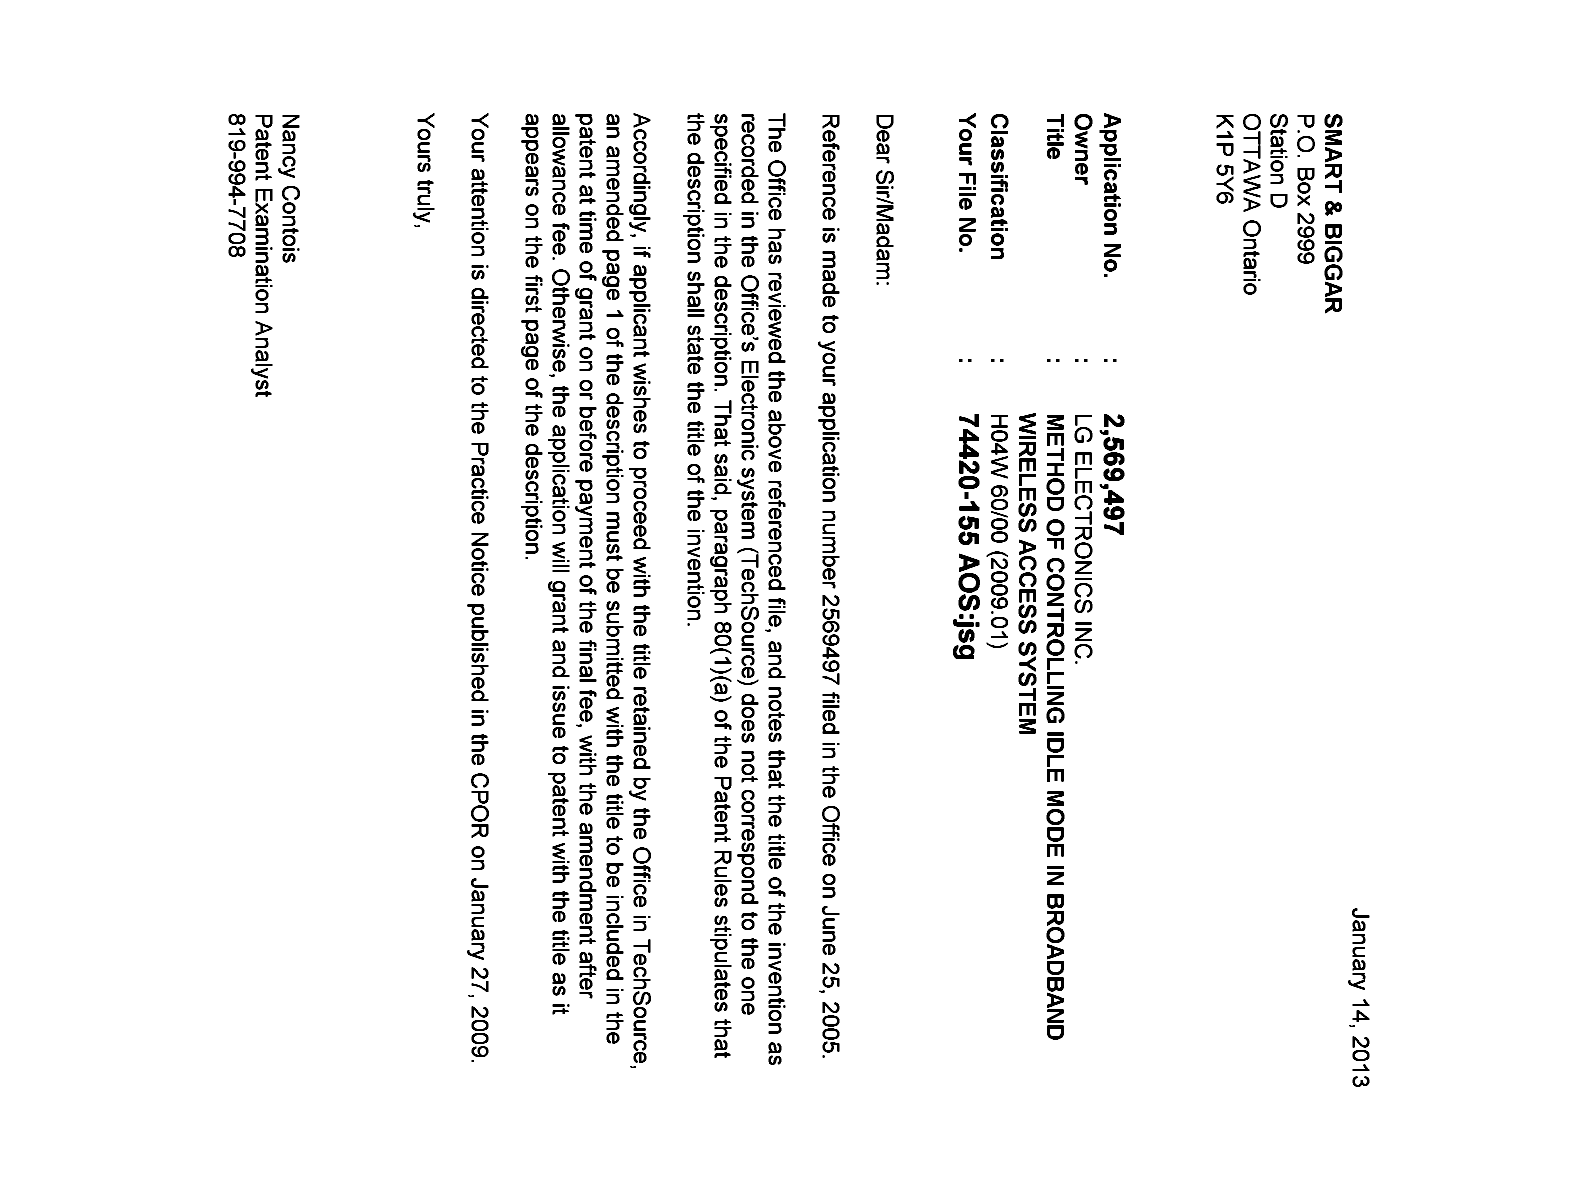 Canadian Patent Document 2569497. Correspondence 20130114. Image 1 of 1